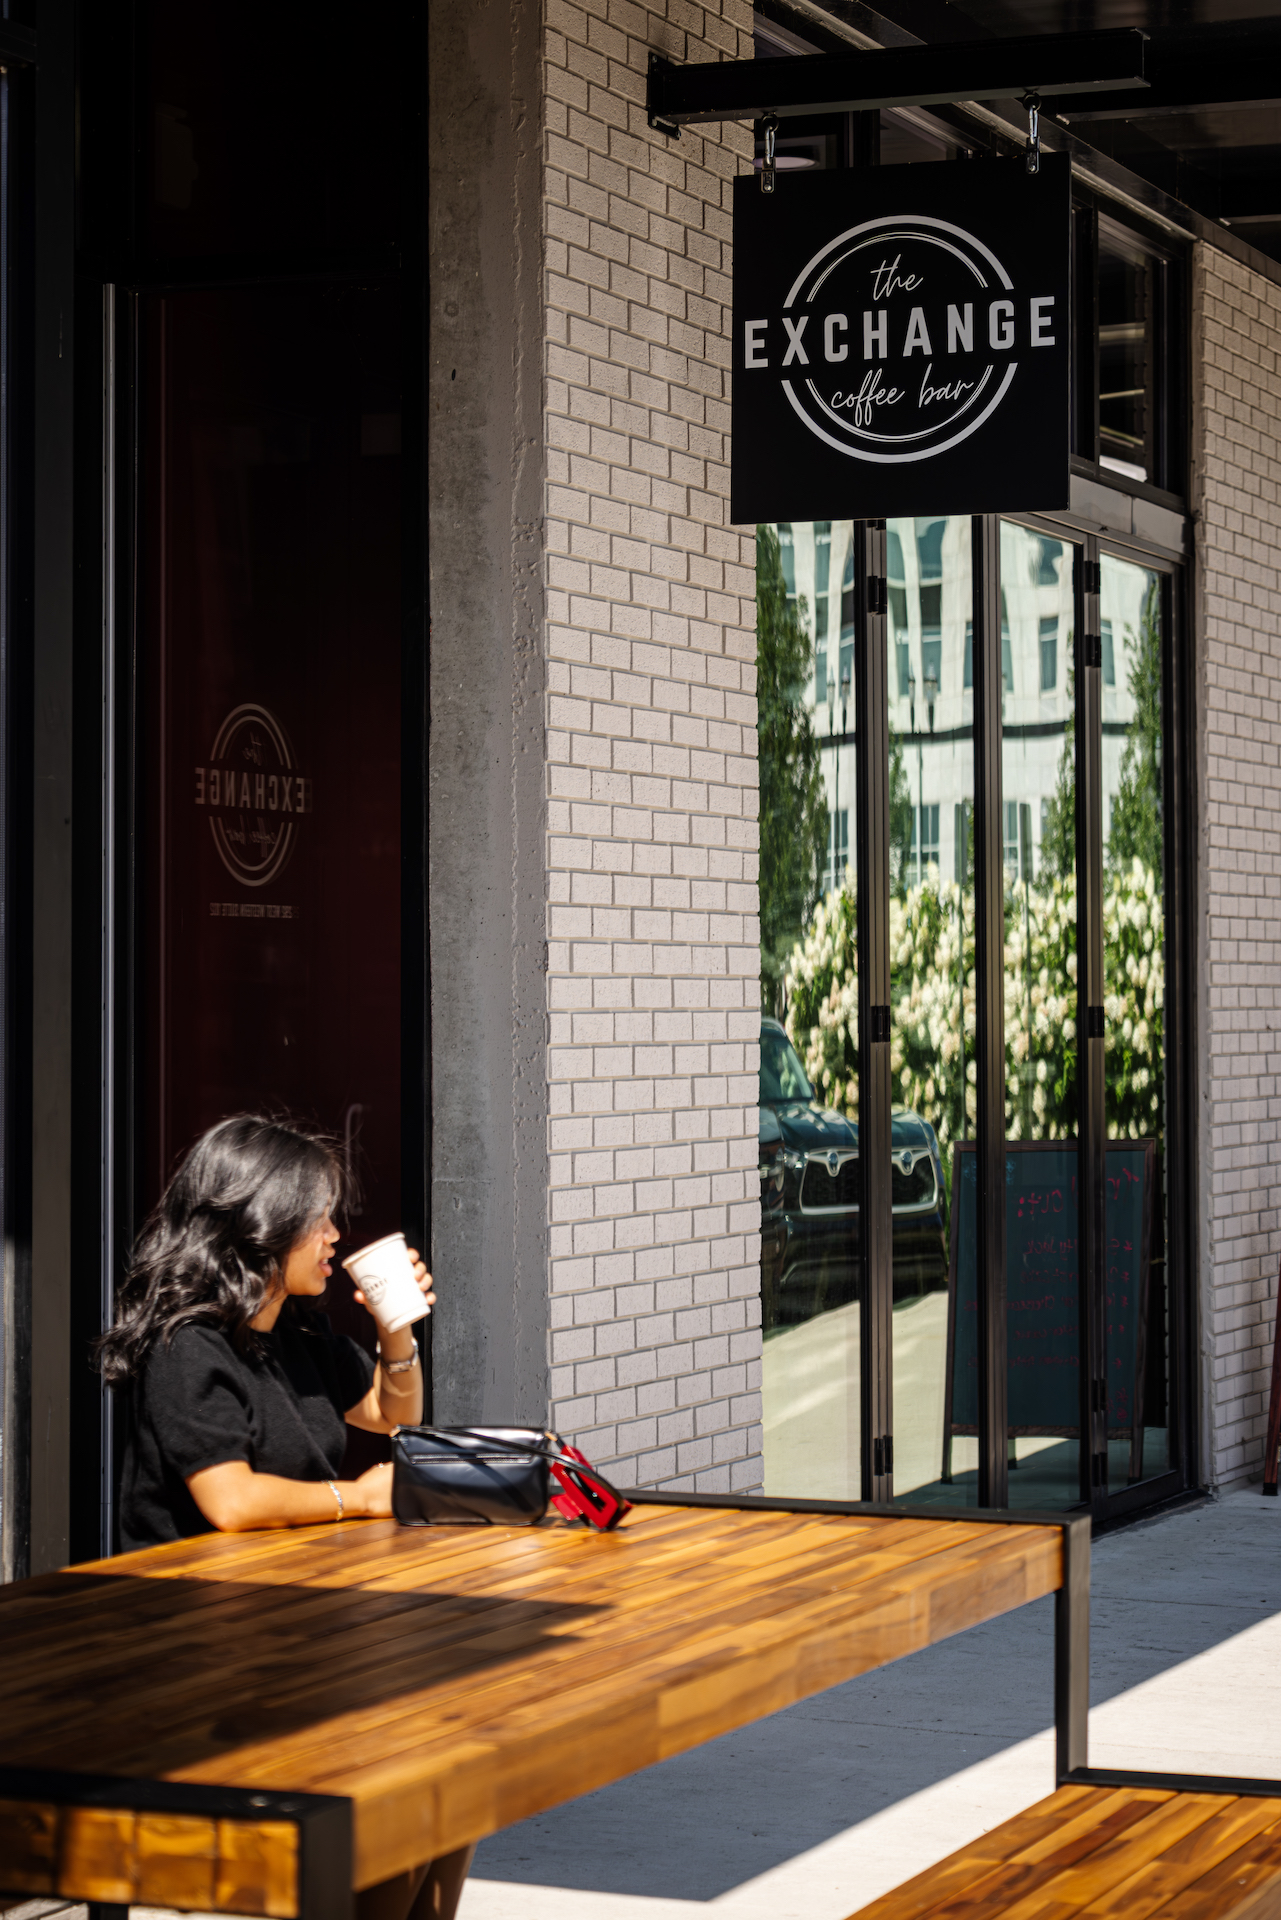 The Exchange Coffee Bar